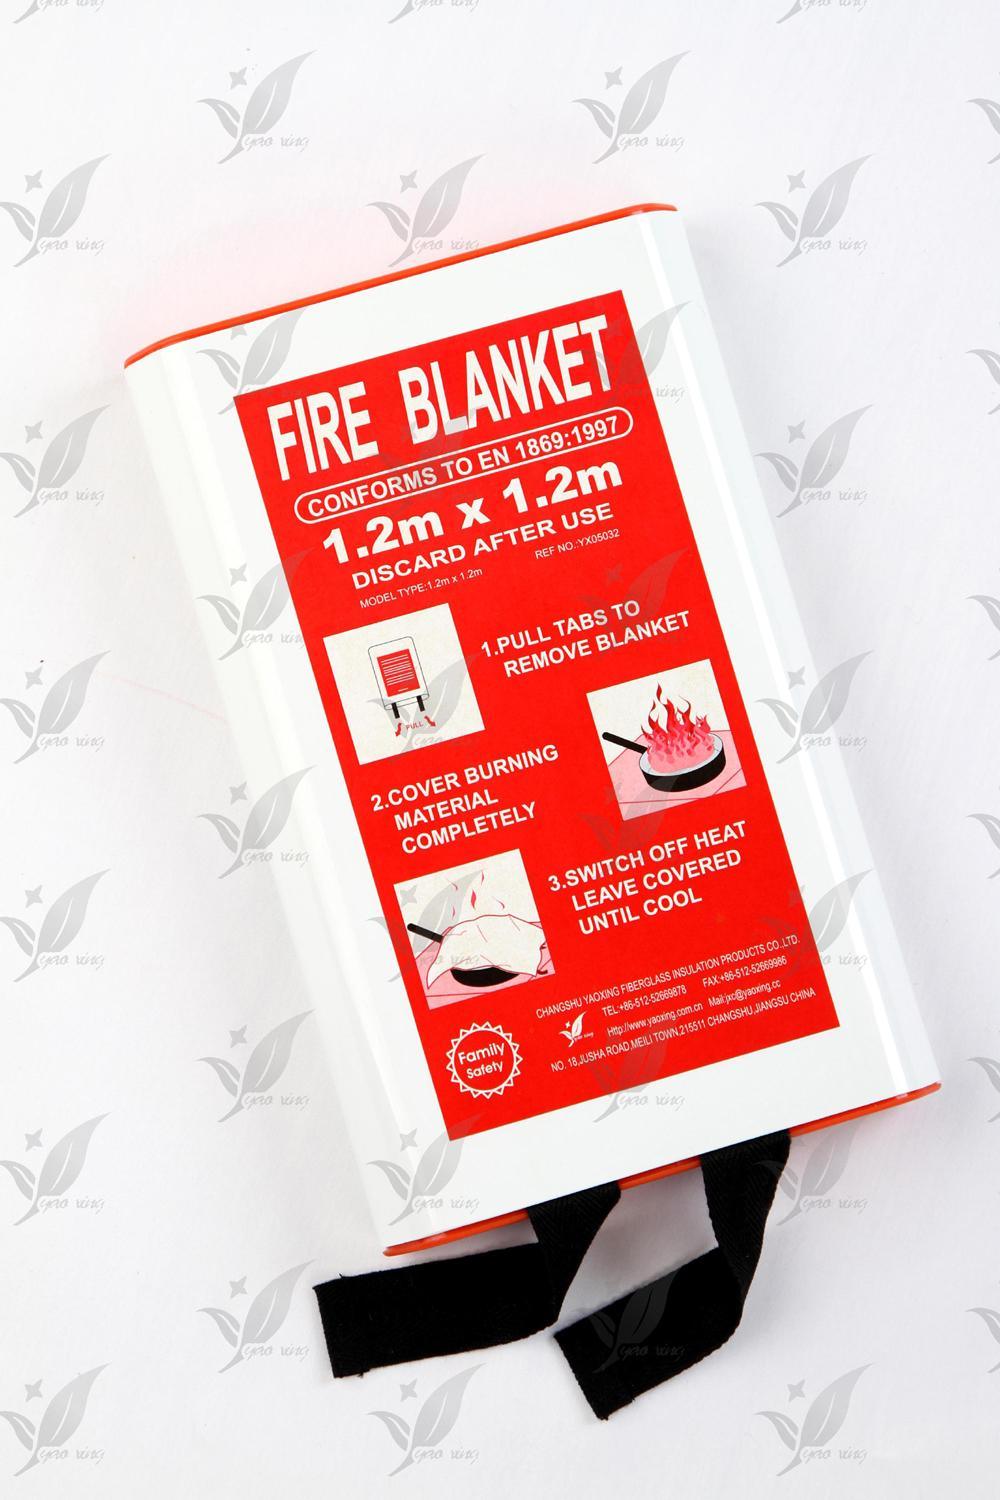 Fiberglass Fire Blanket for Home School En1869: 1977 Certificate